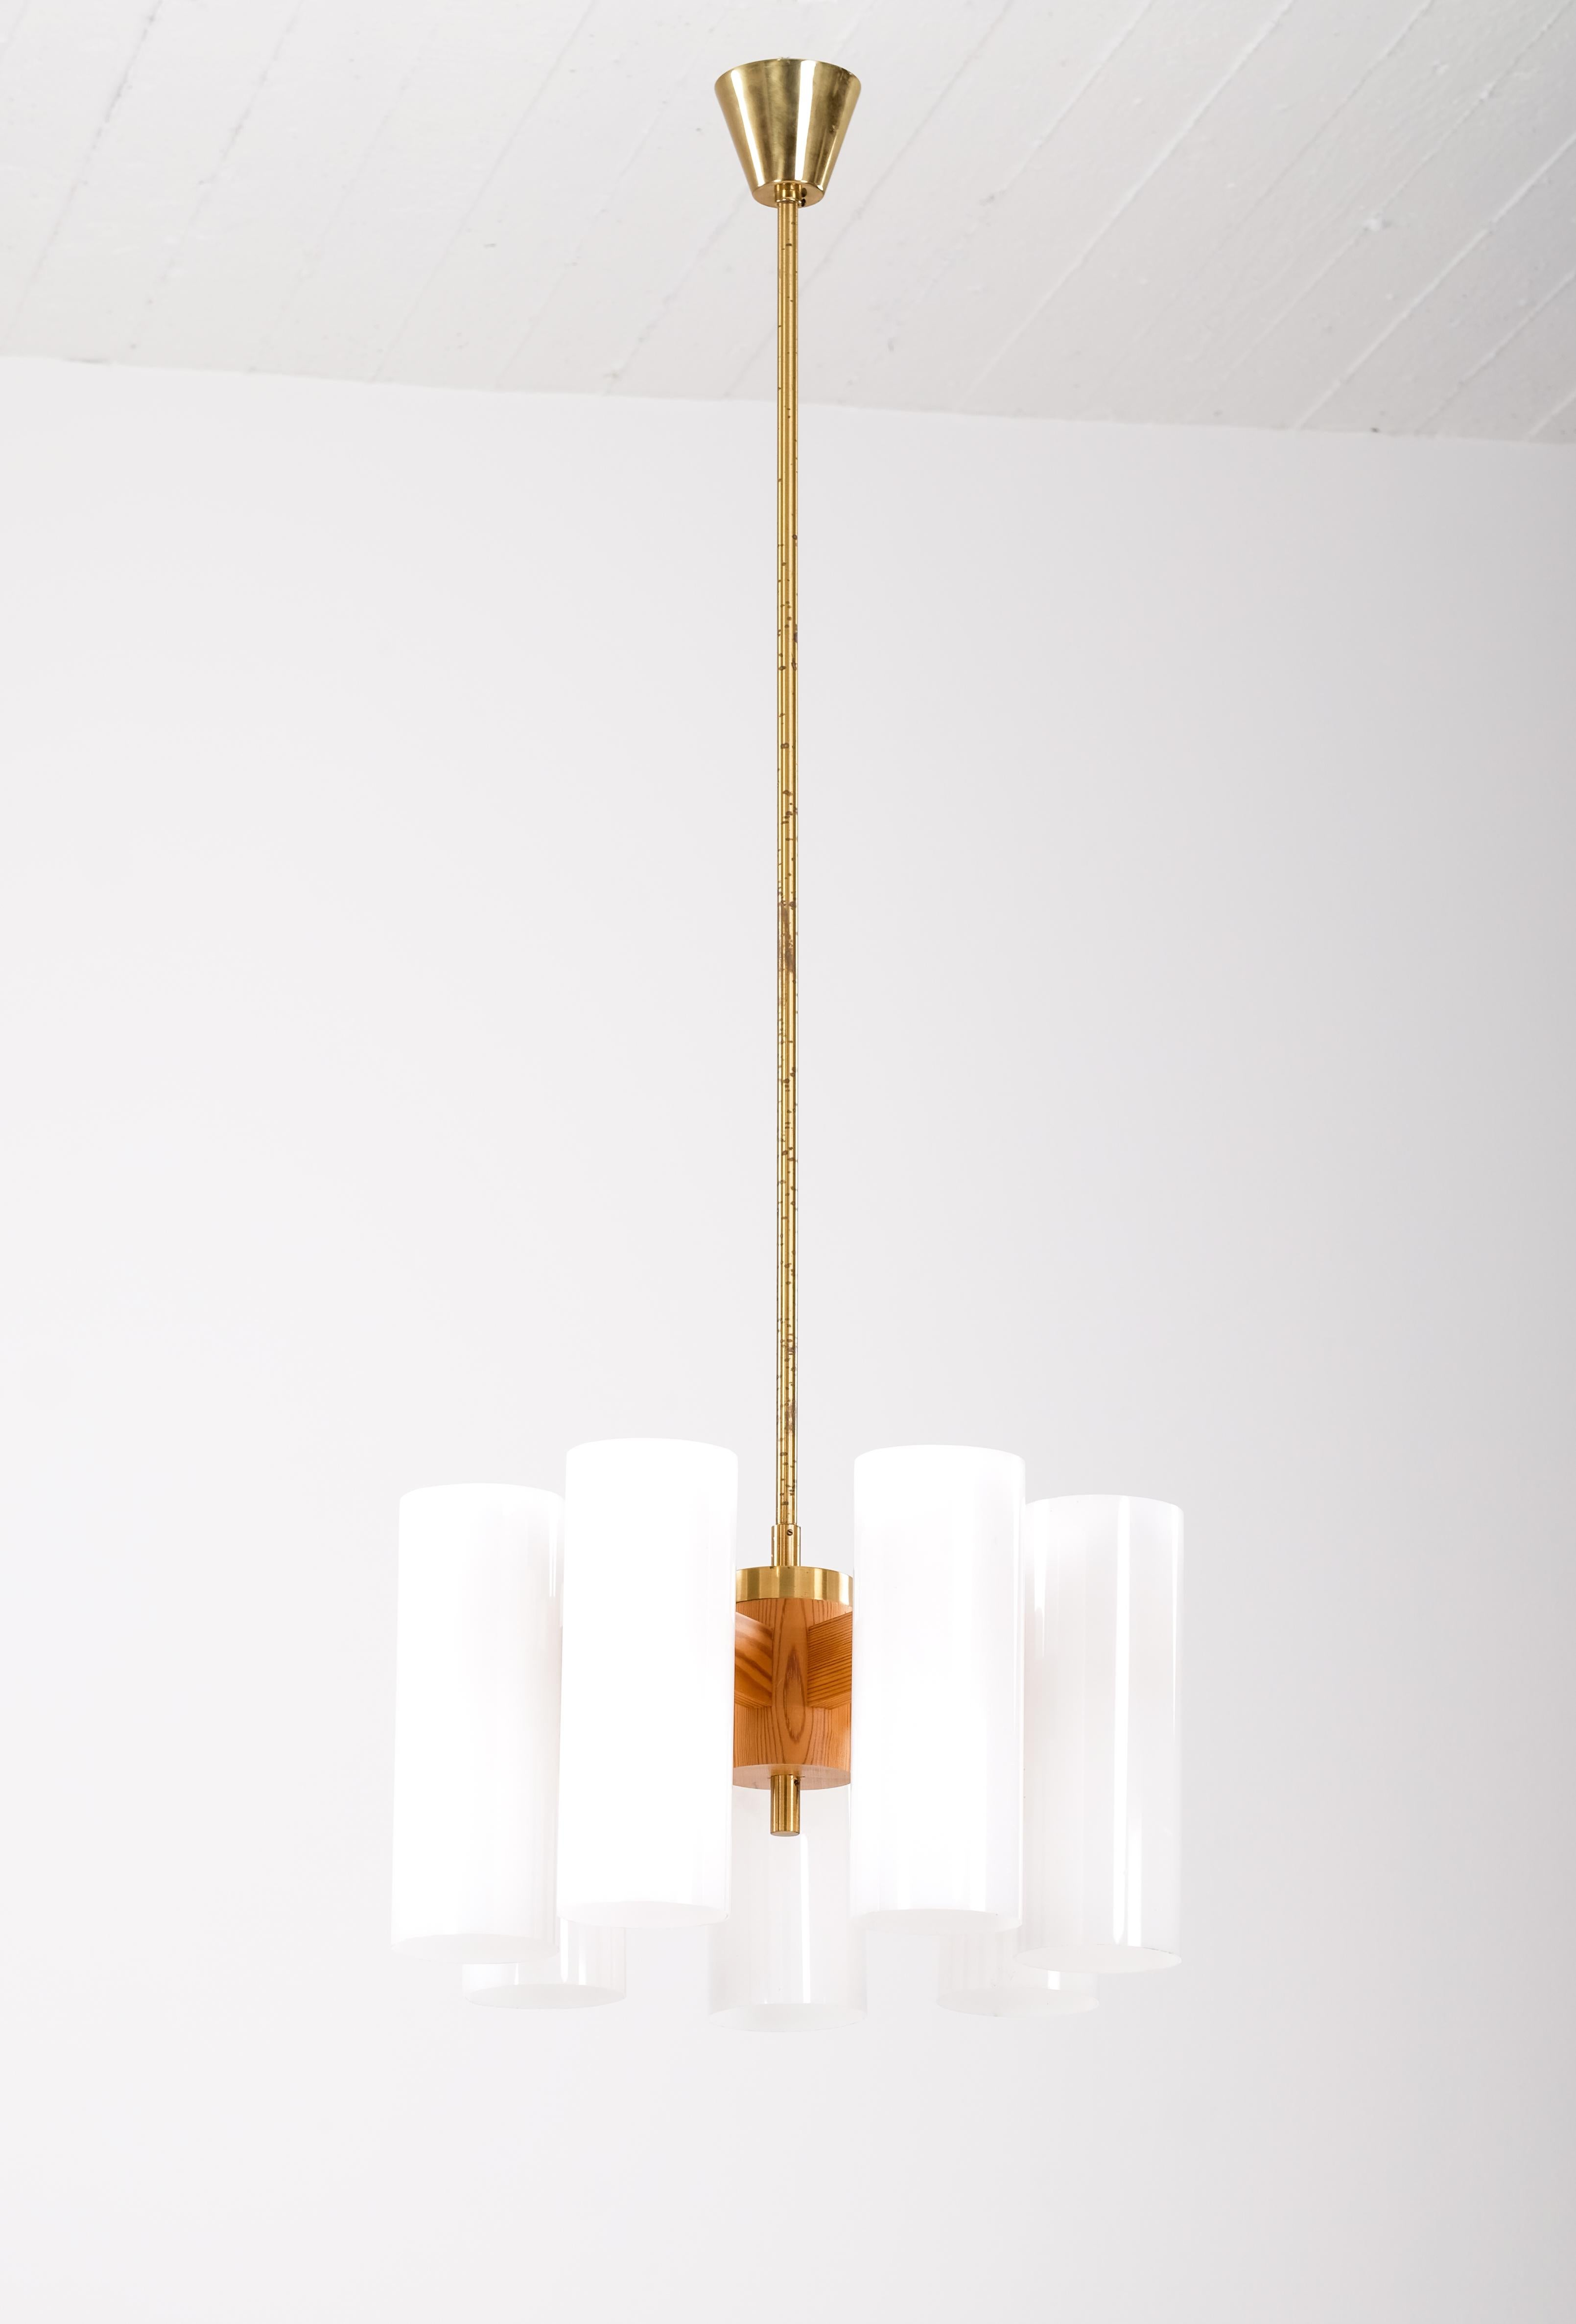 Scandinavian Modern Set of 8 Luxus ceiling lights by Uno & Östen Kristiansson, Sweden, 1960s For Sale